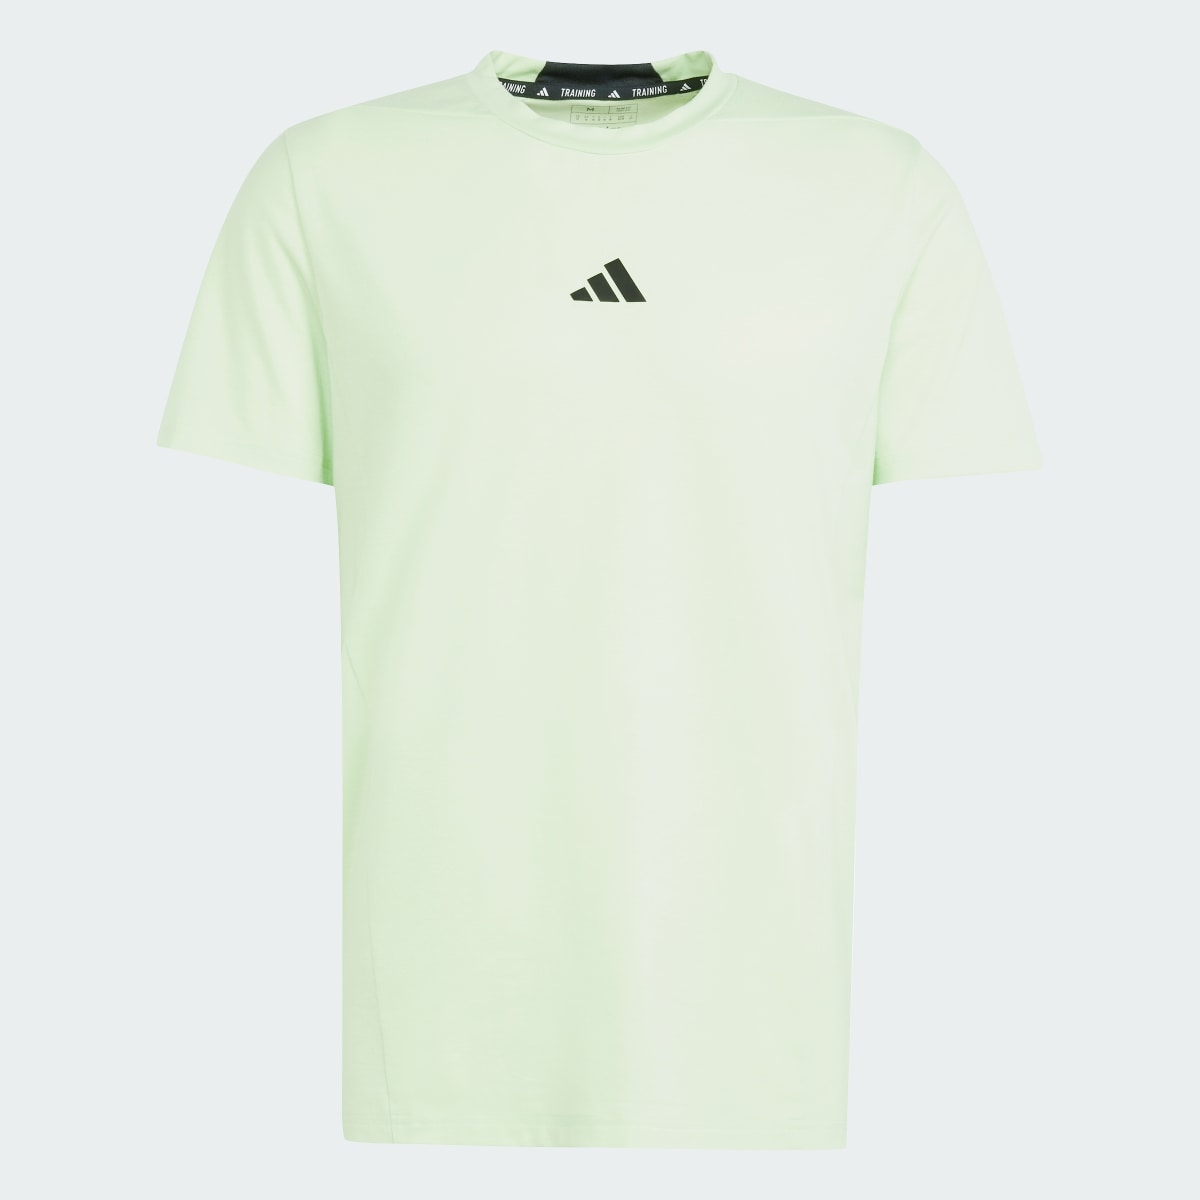 Adidas Designed for Training Workout T-Shirt. 5